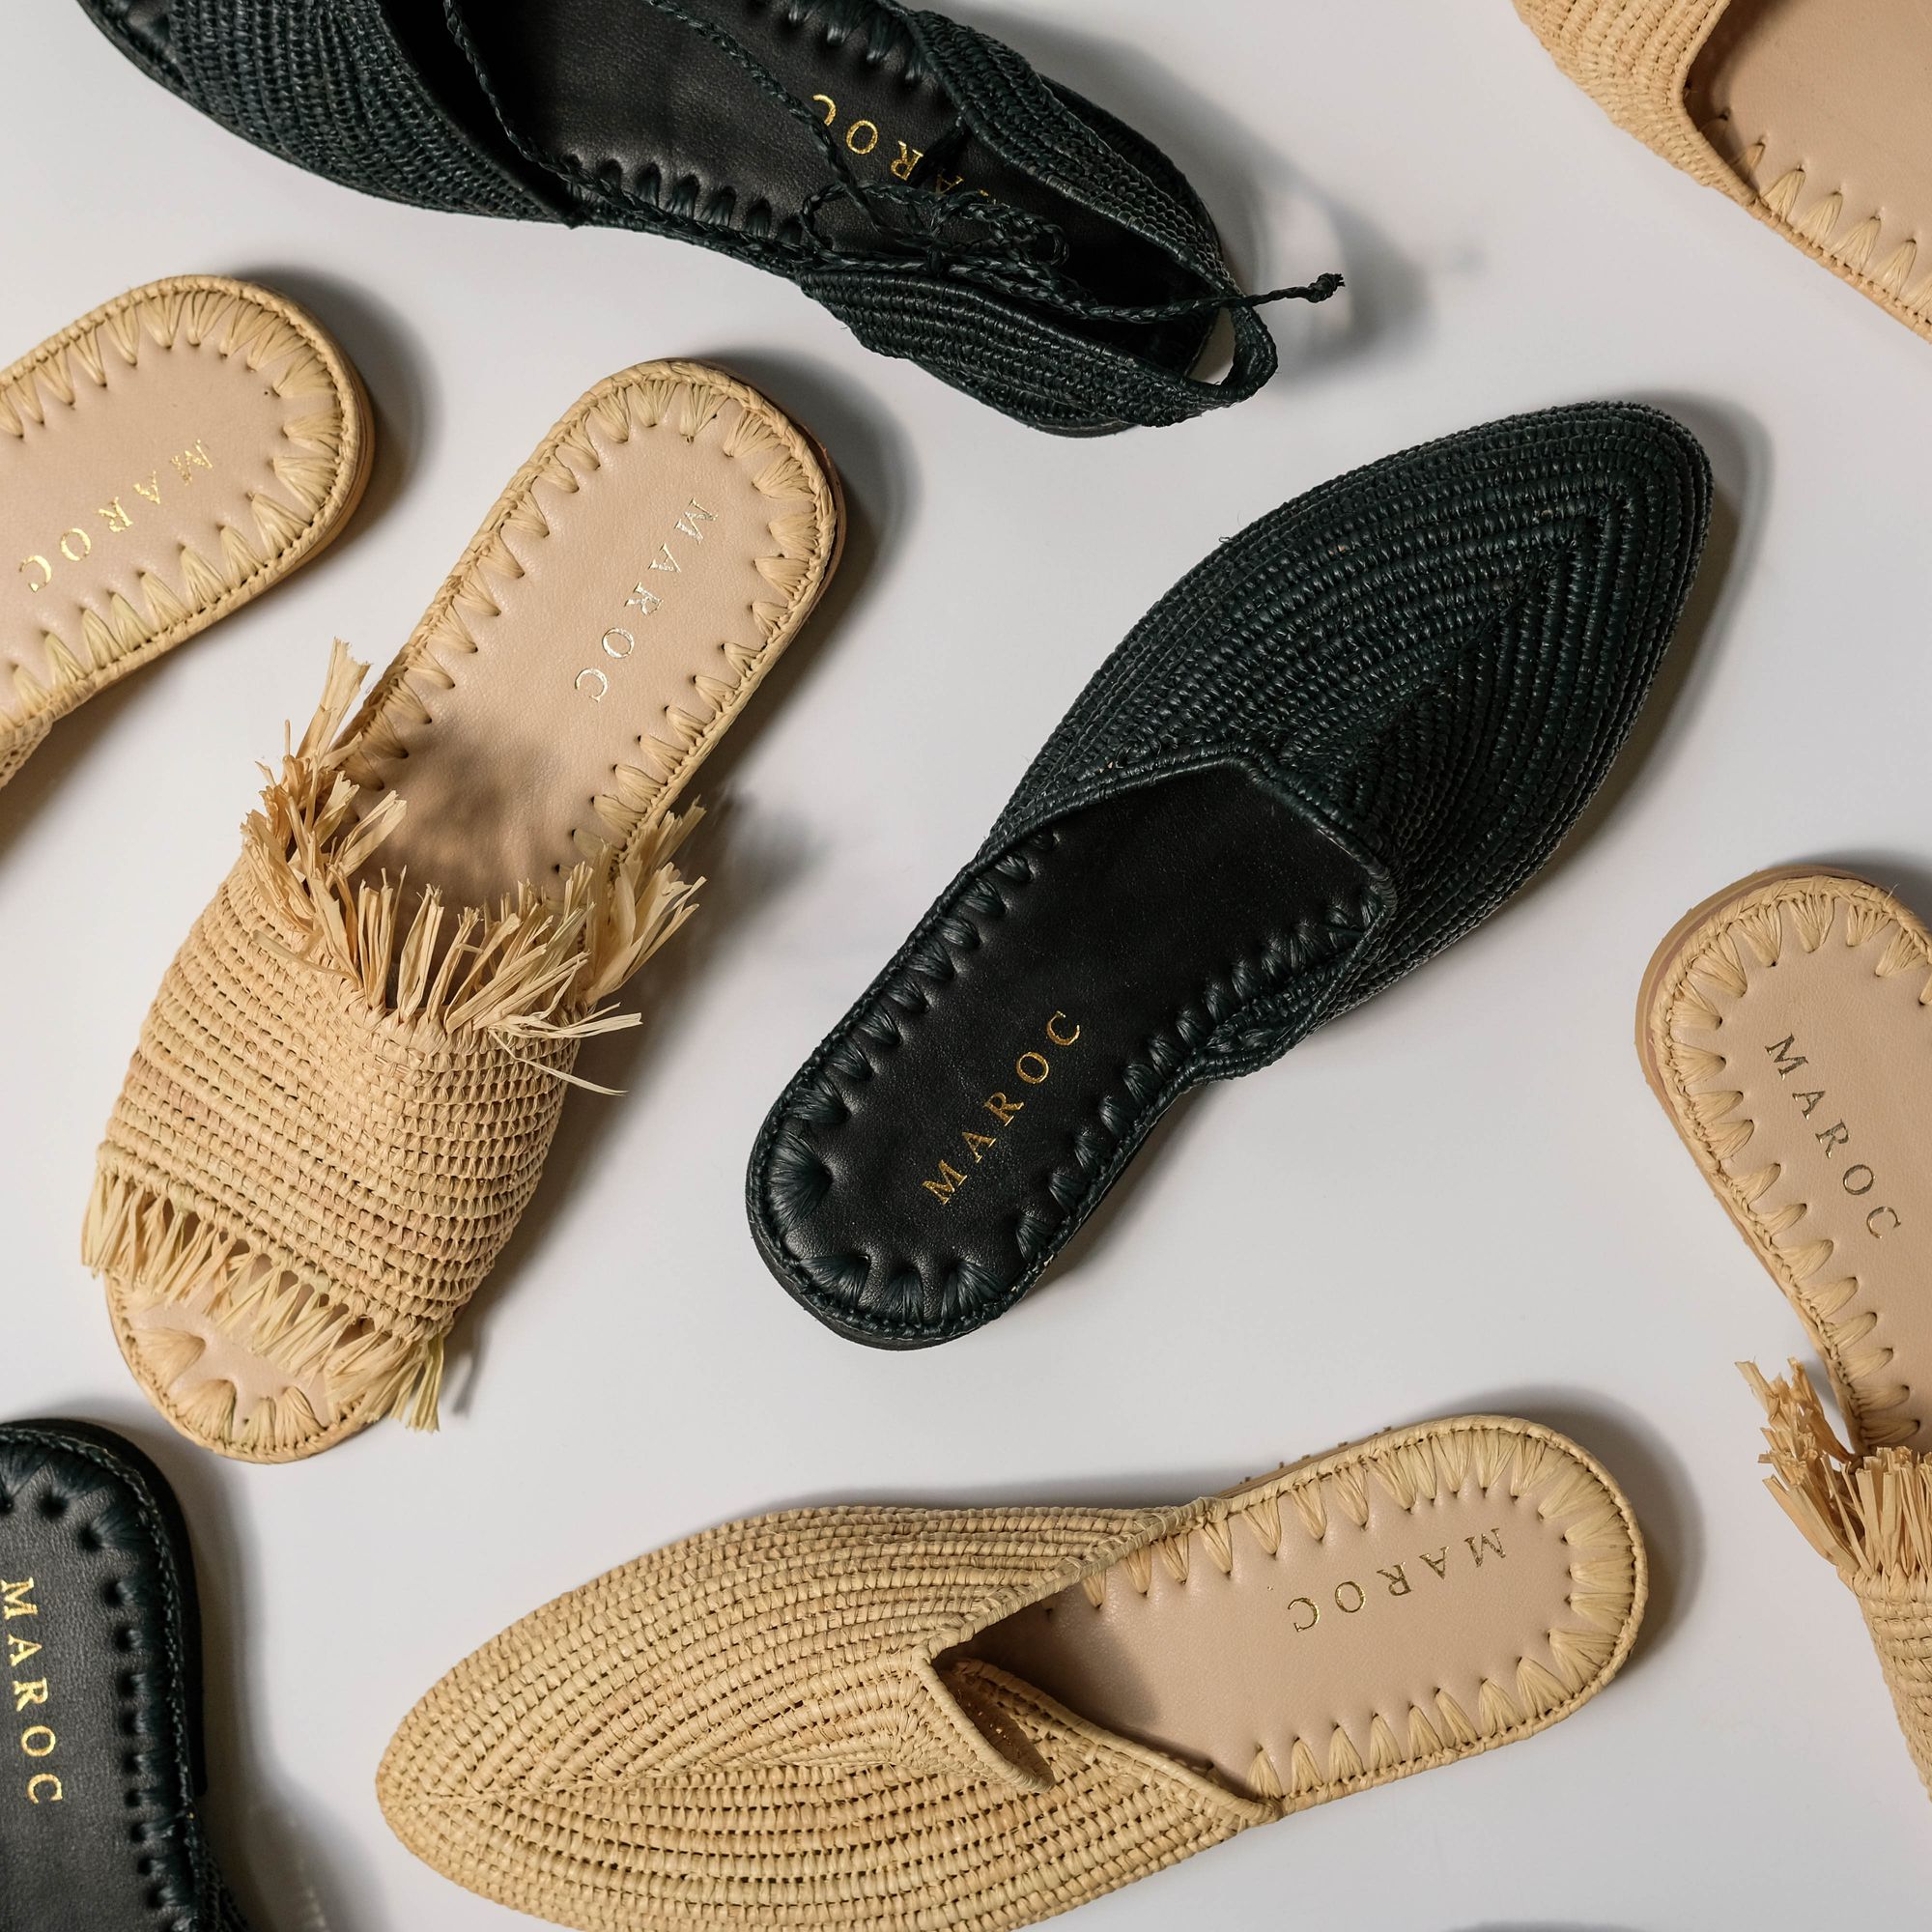 Maroc the Label: Celebrating Women with Carefully Handmade Sandals